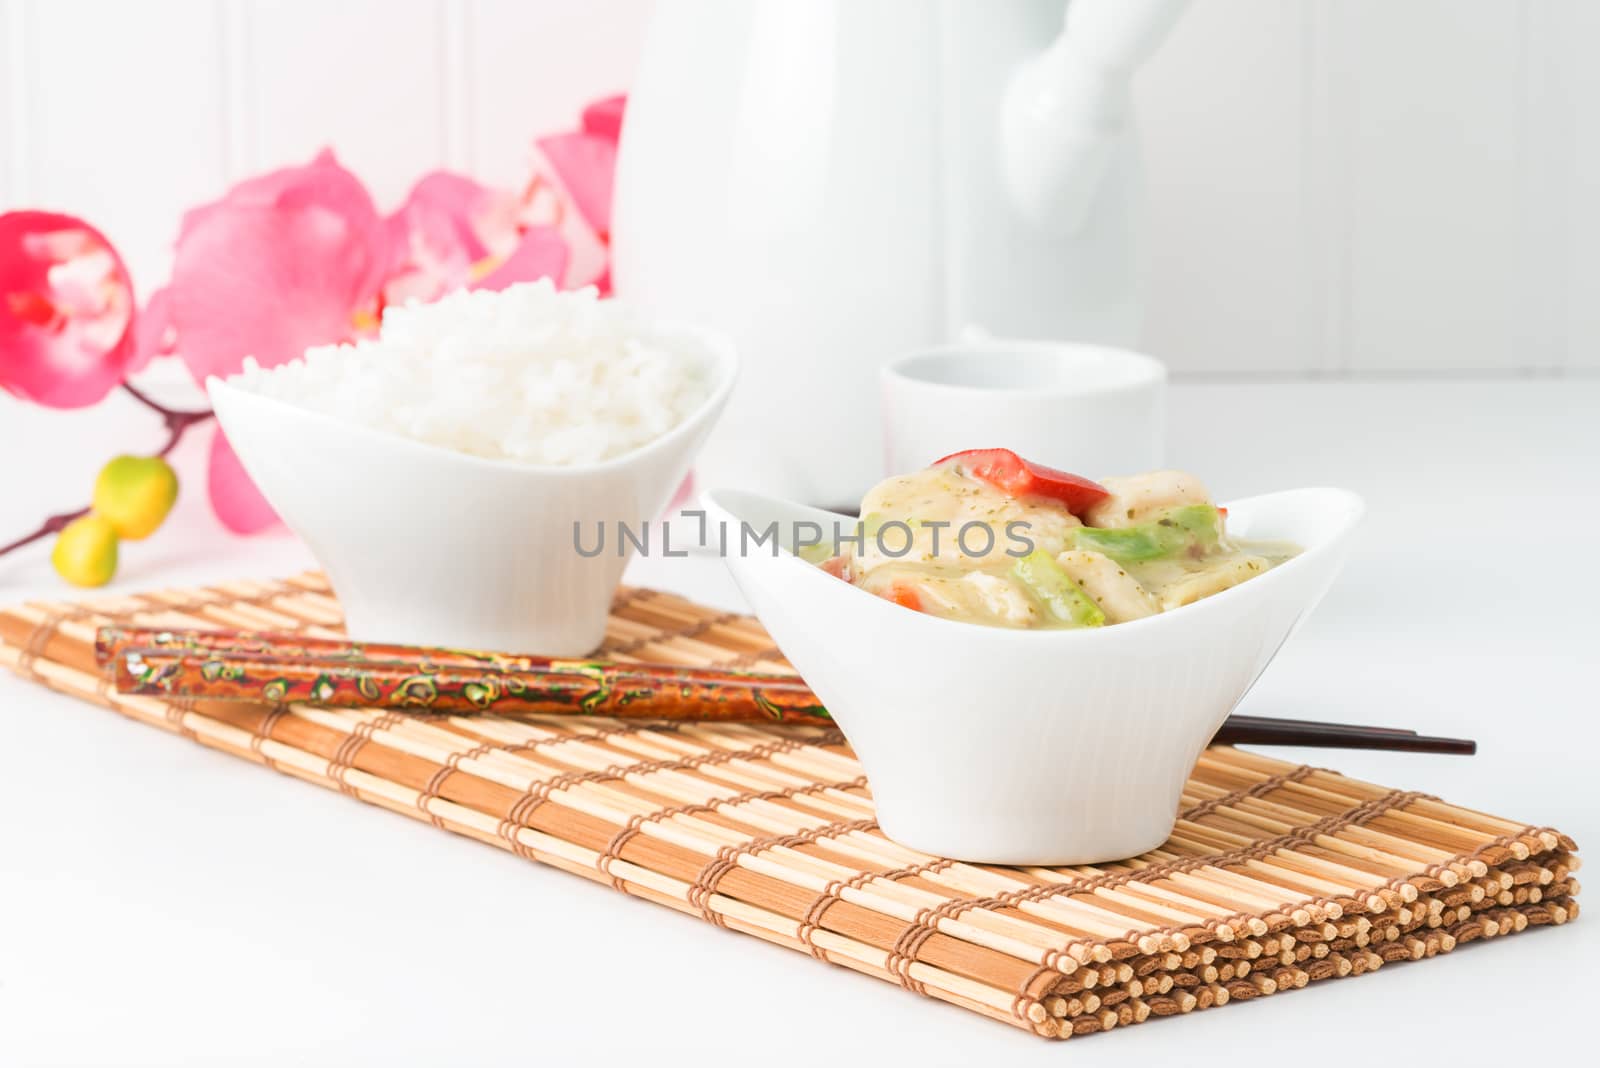 Green curry chicken served with white jasmine rice.